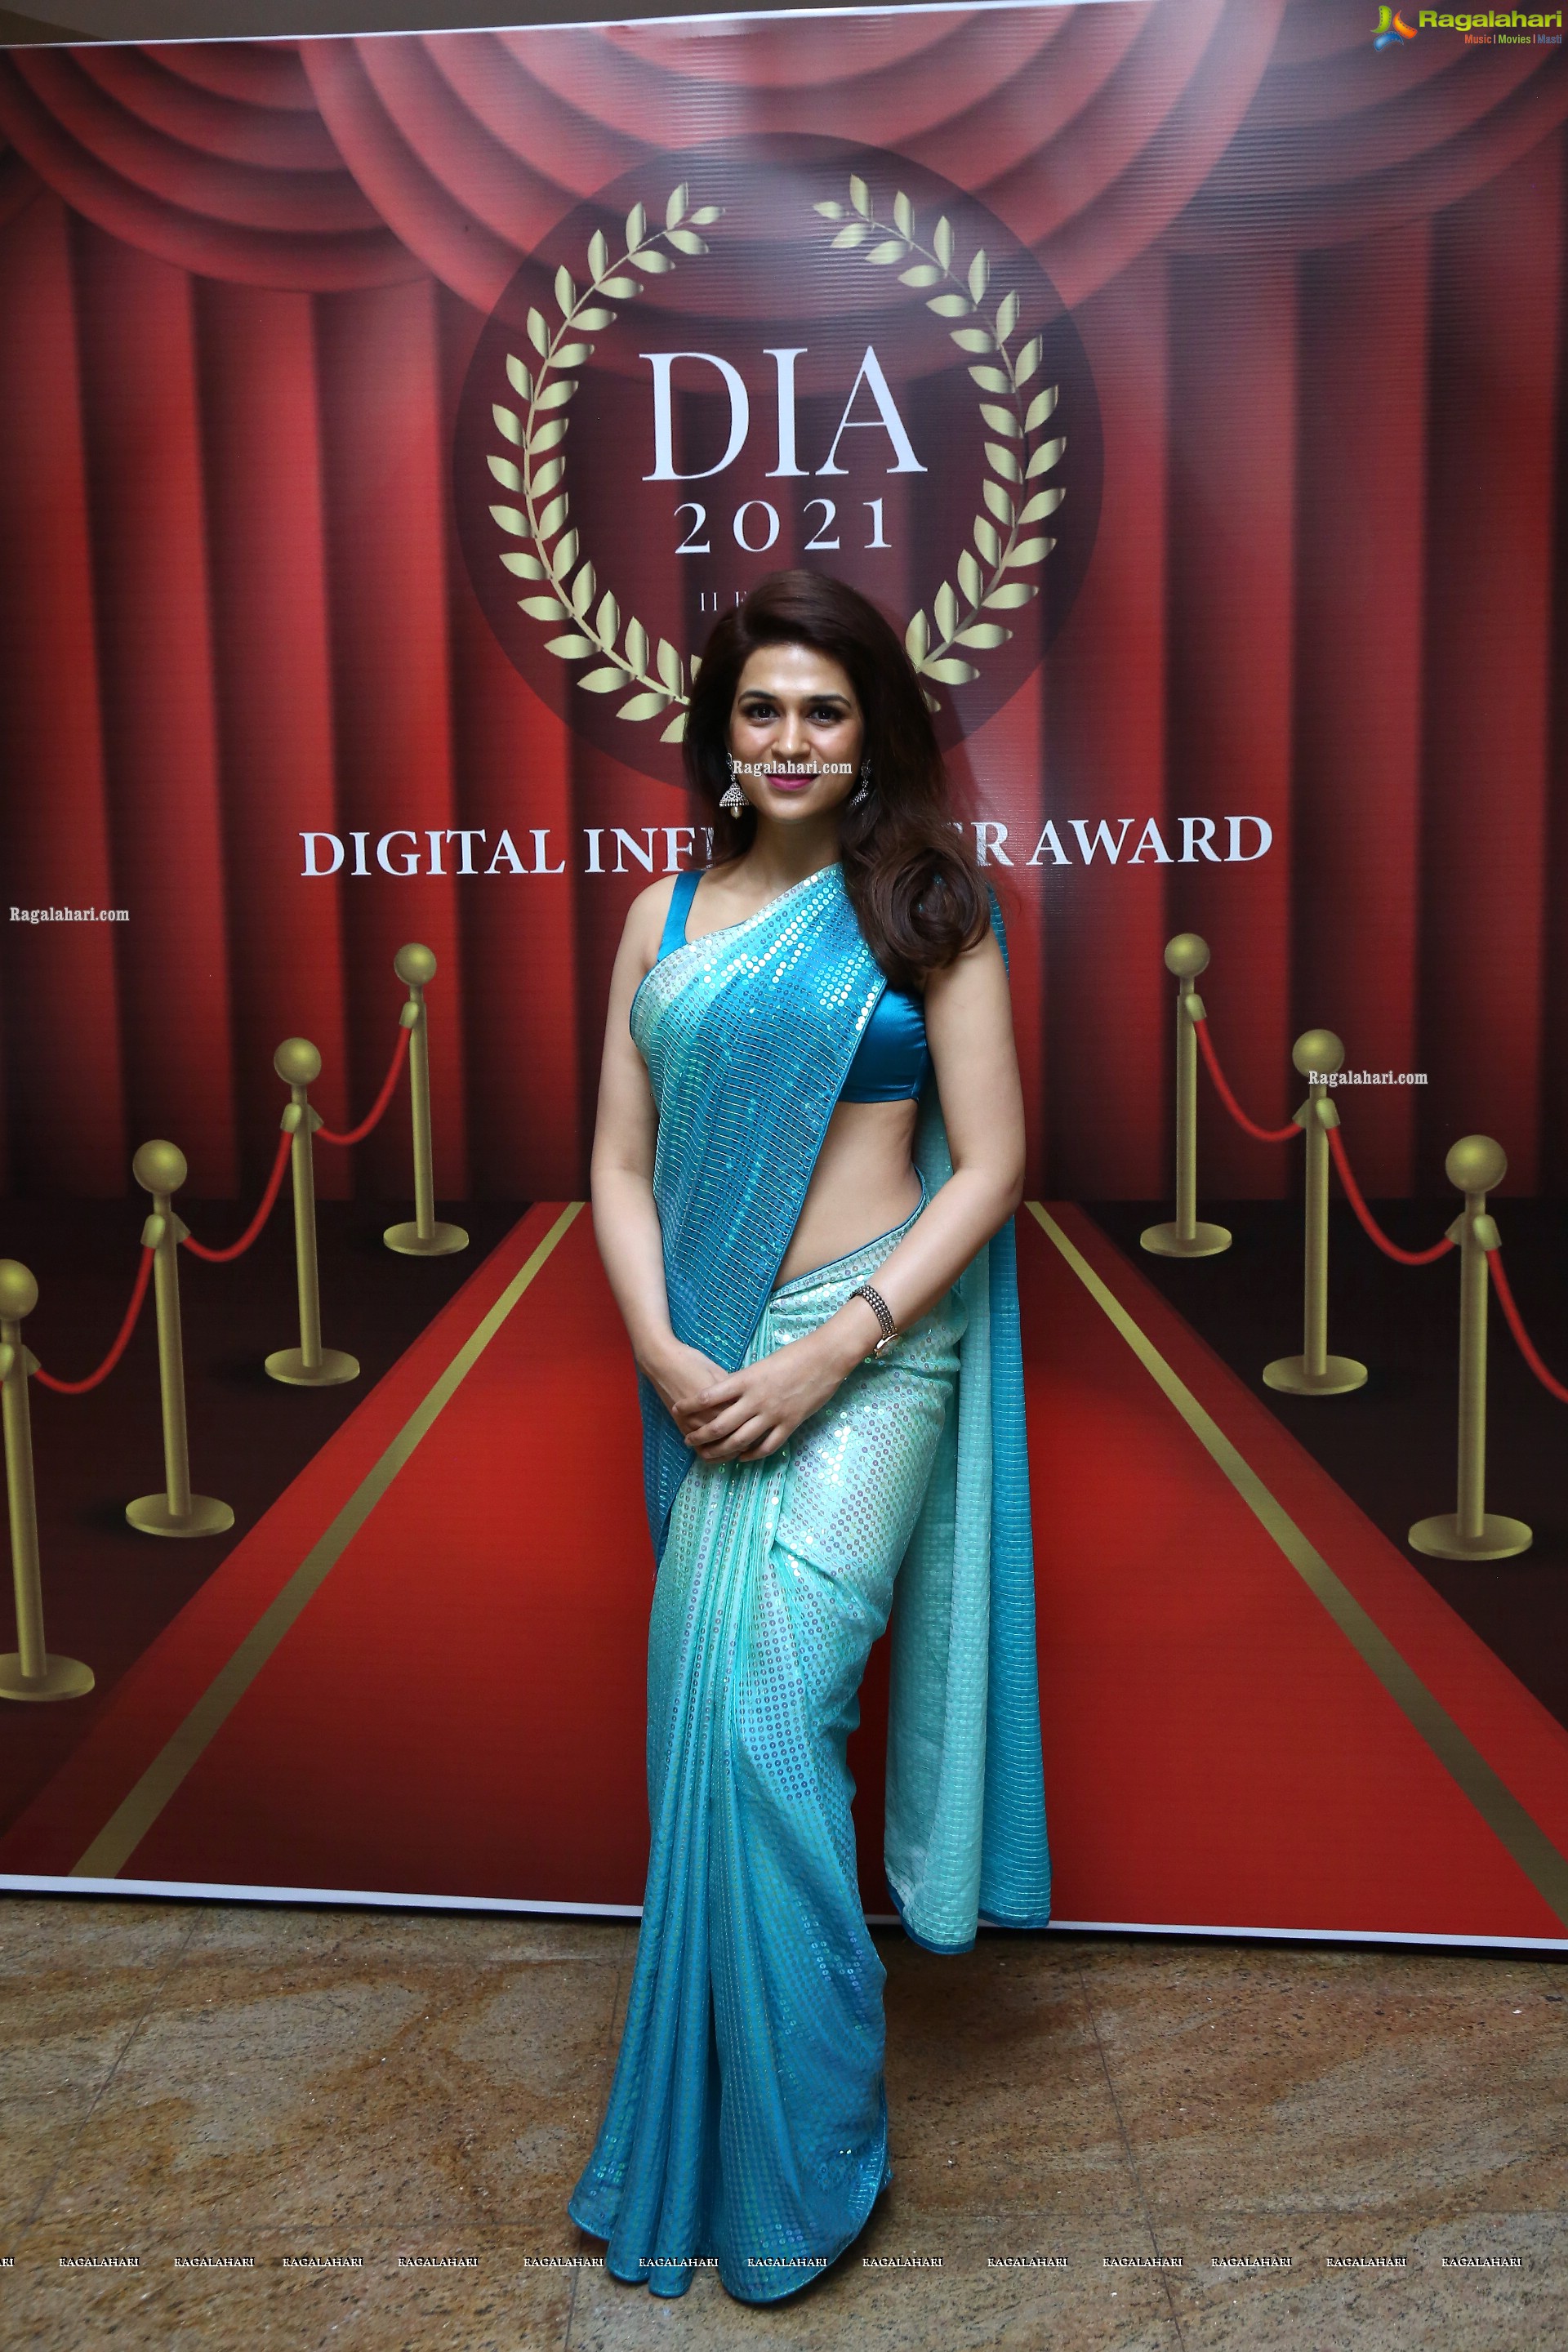 Shraddha Das at DIA 2021 - Digital Influencer Awards, HD Photo Gallery